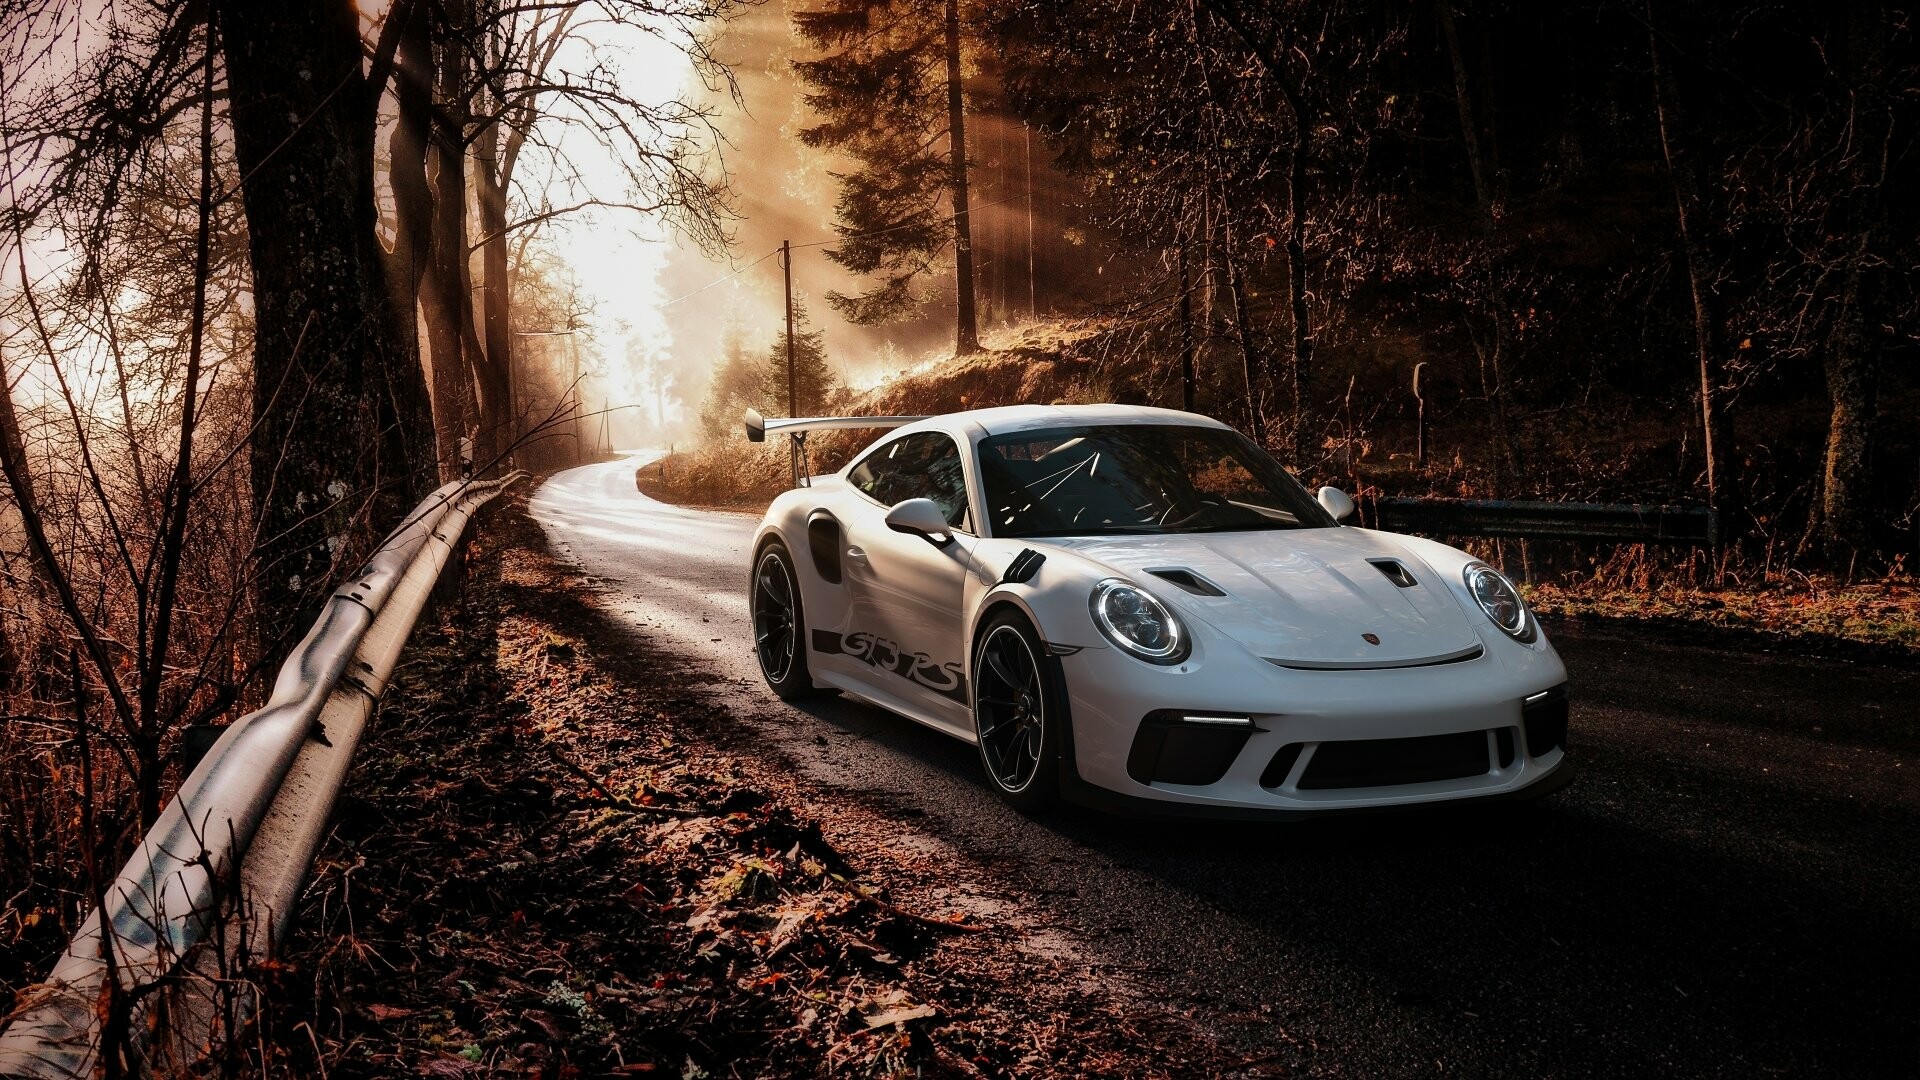 Porsche GT3, Auto excellence, 4K luxury, Ultimate performance, 1920x1080 Full HD Desktop